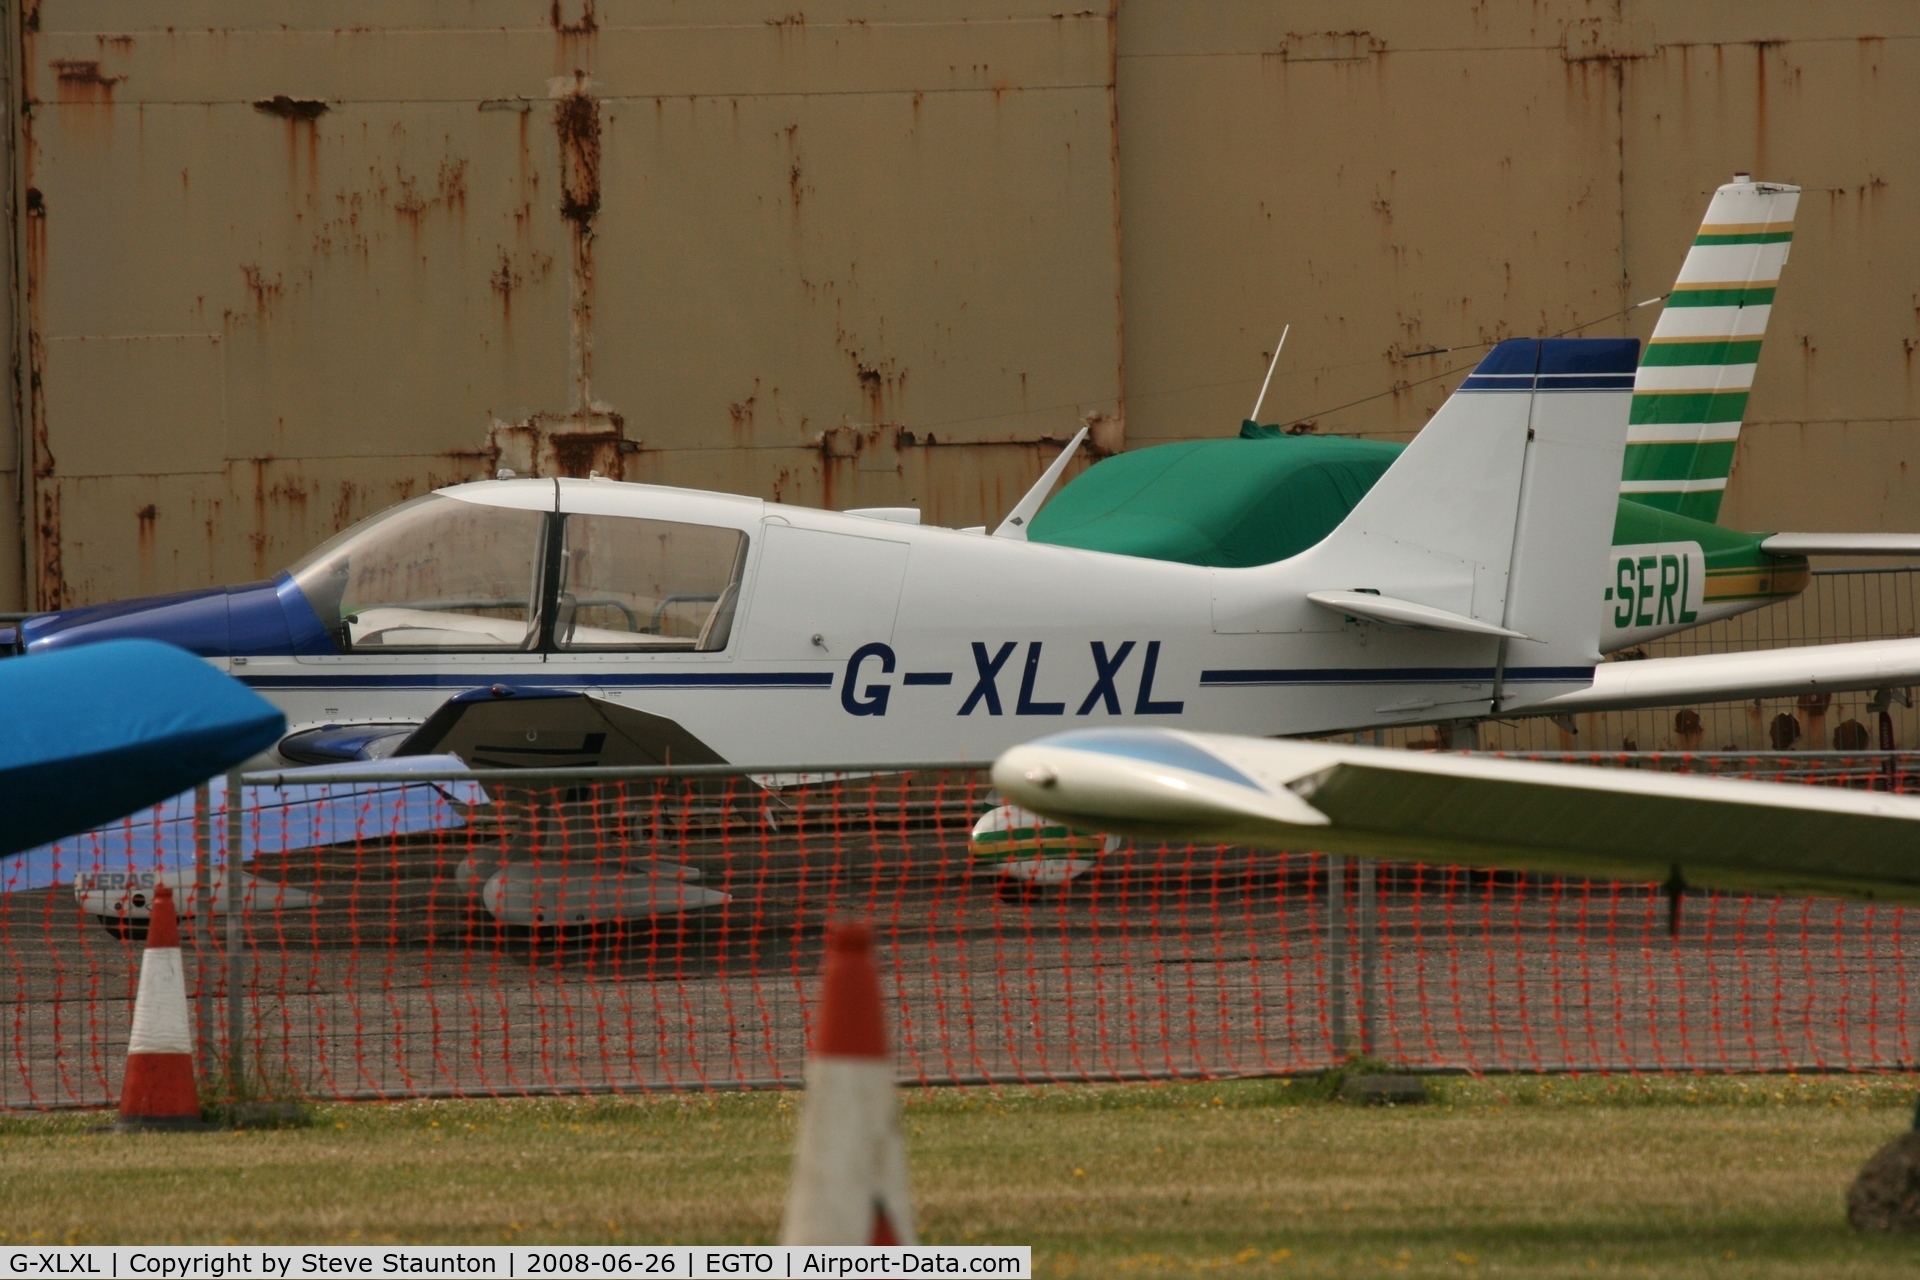 G-XLXL, 1973 Robin DR-400-160 Chevalier C/N 813, Taken at Rochester Airport 20th June 2008.